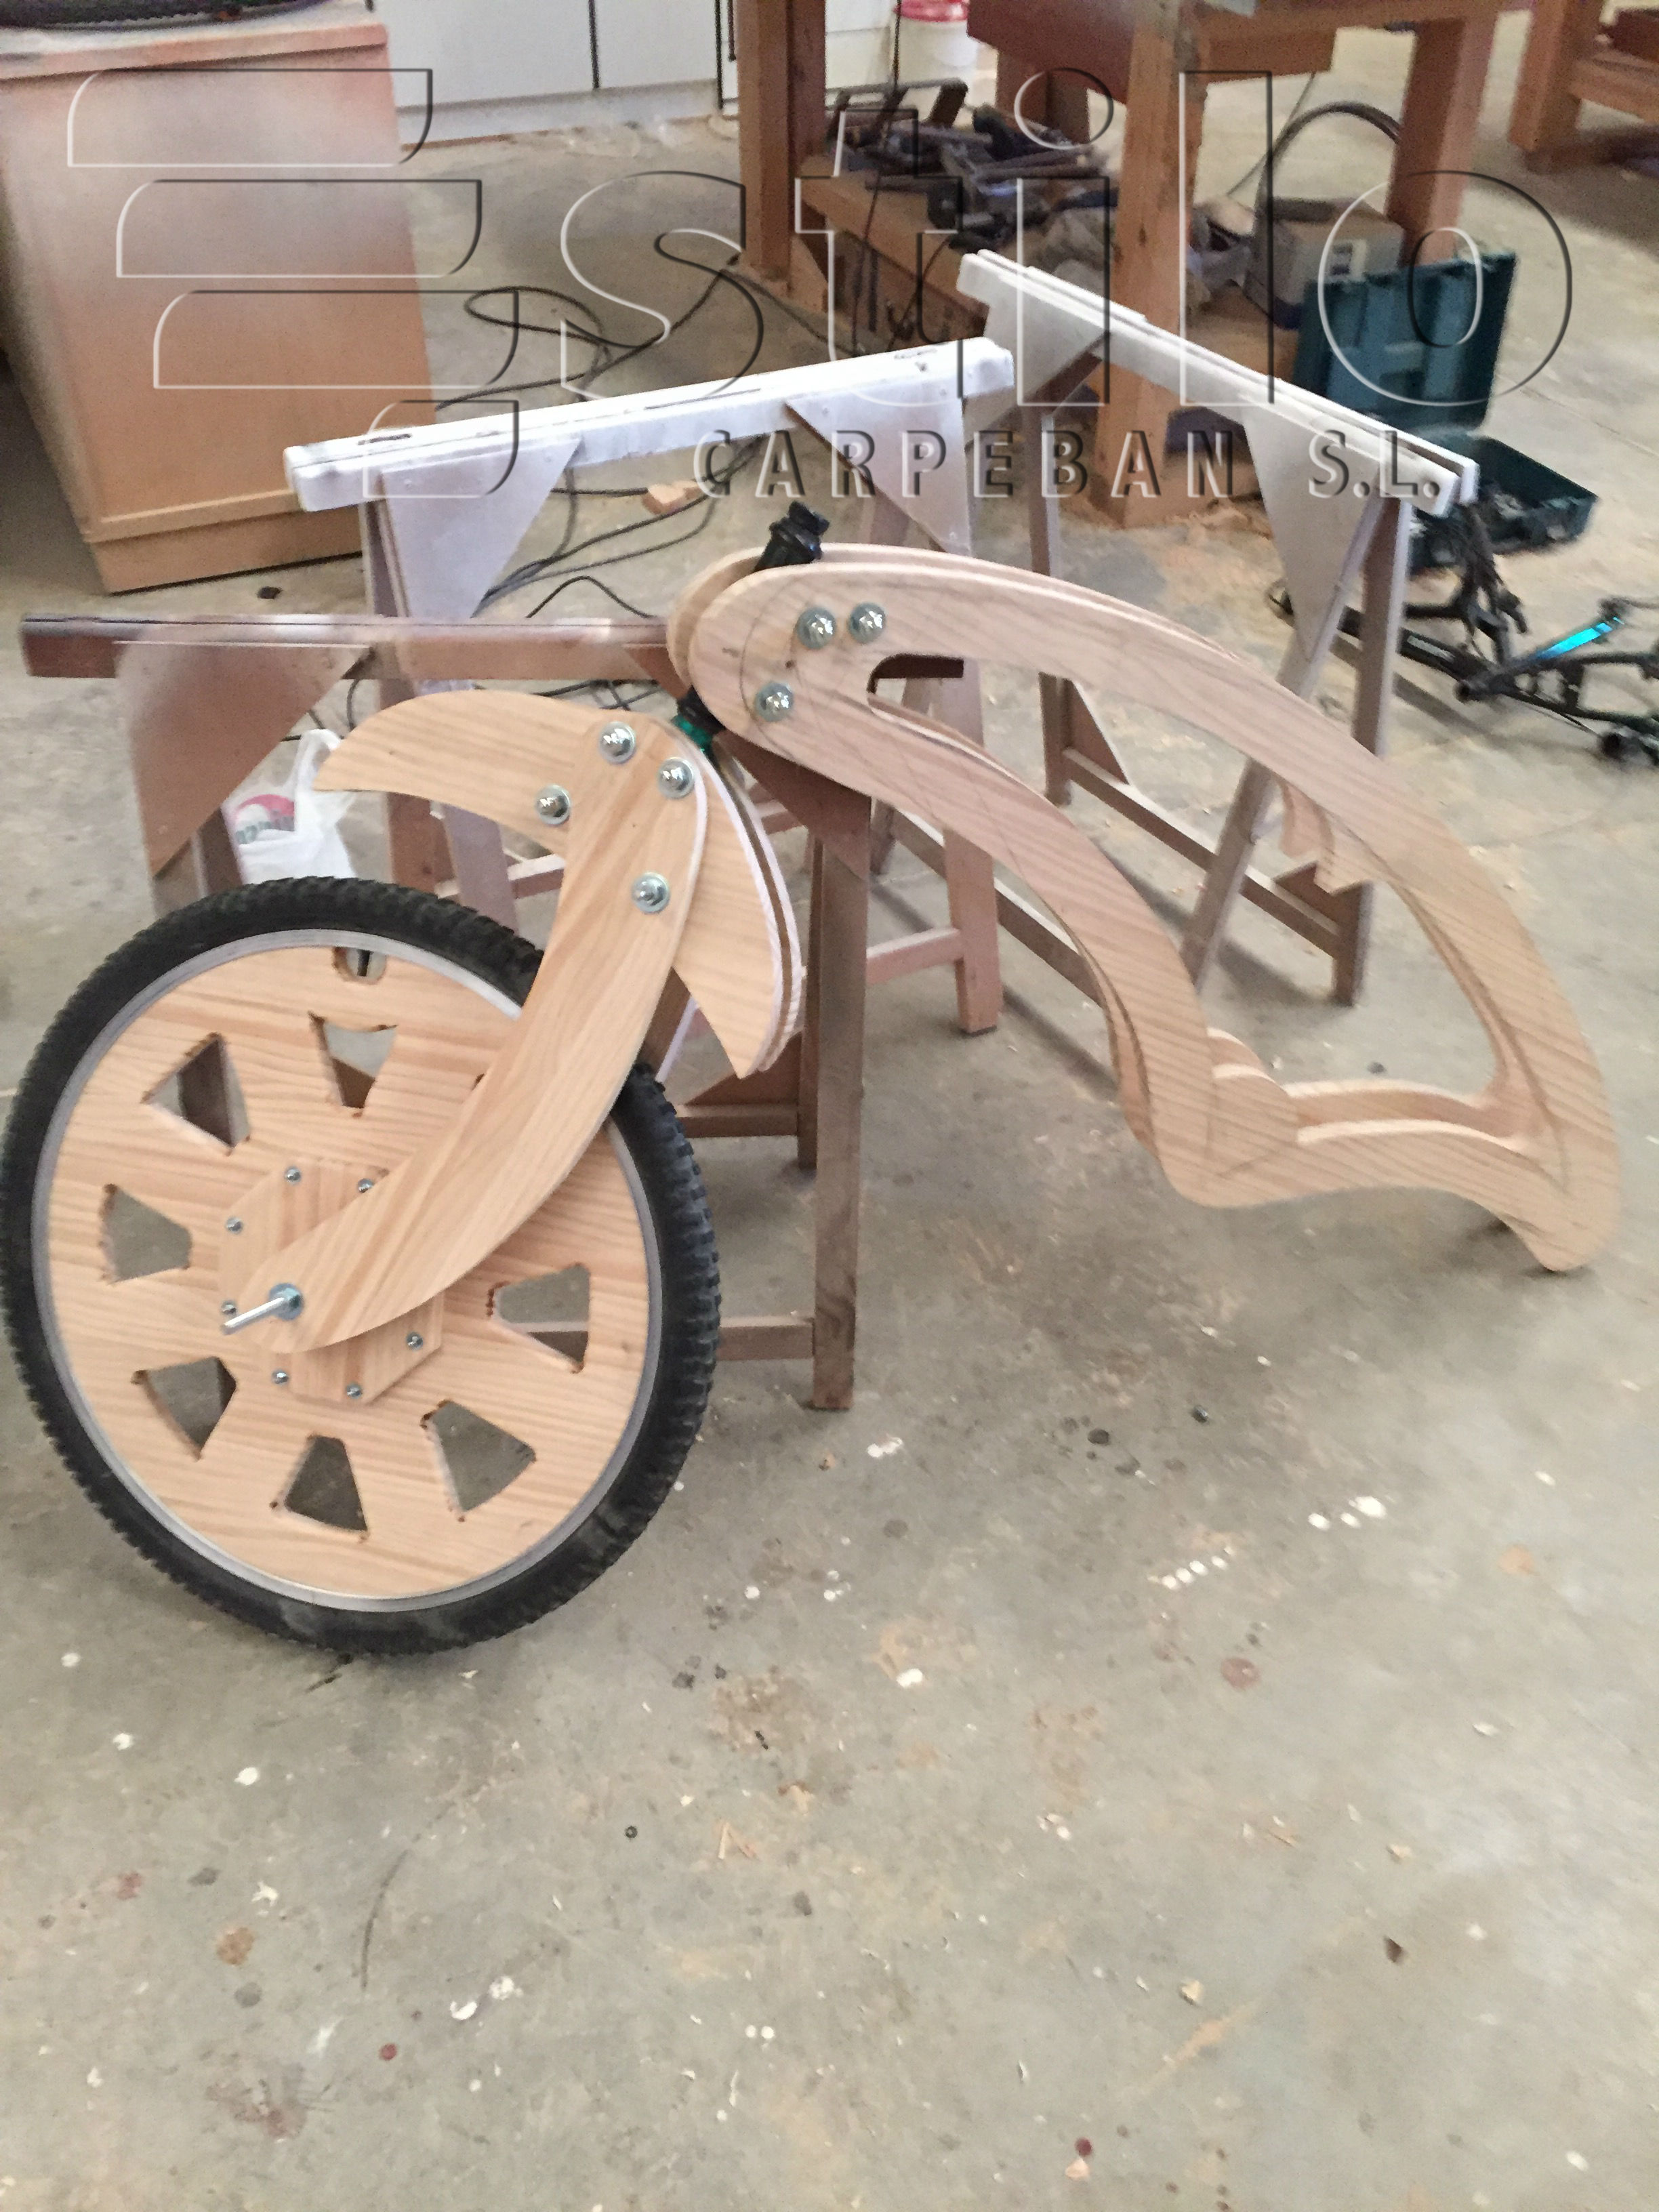 Proceso de realizacin de bicicleta de madera. Carpintera Ebanistera Carpeban Stilo, en Salamanca.